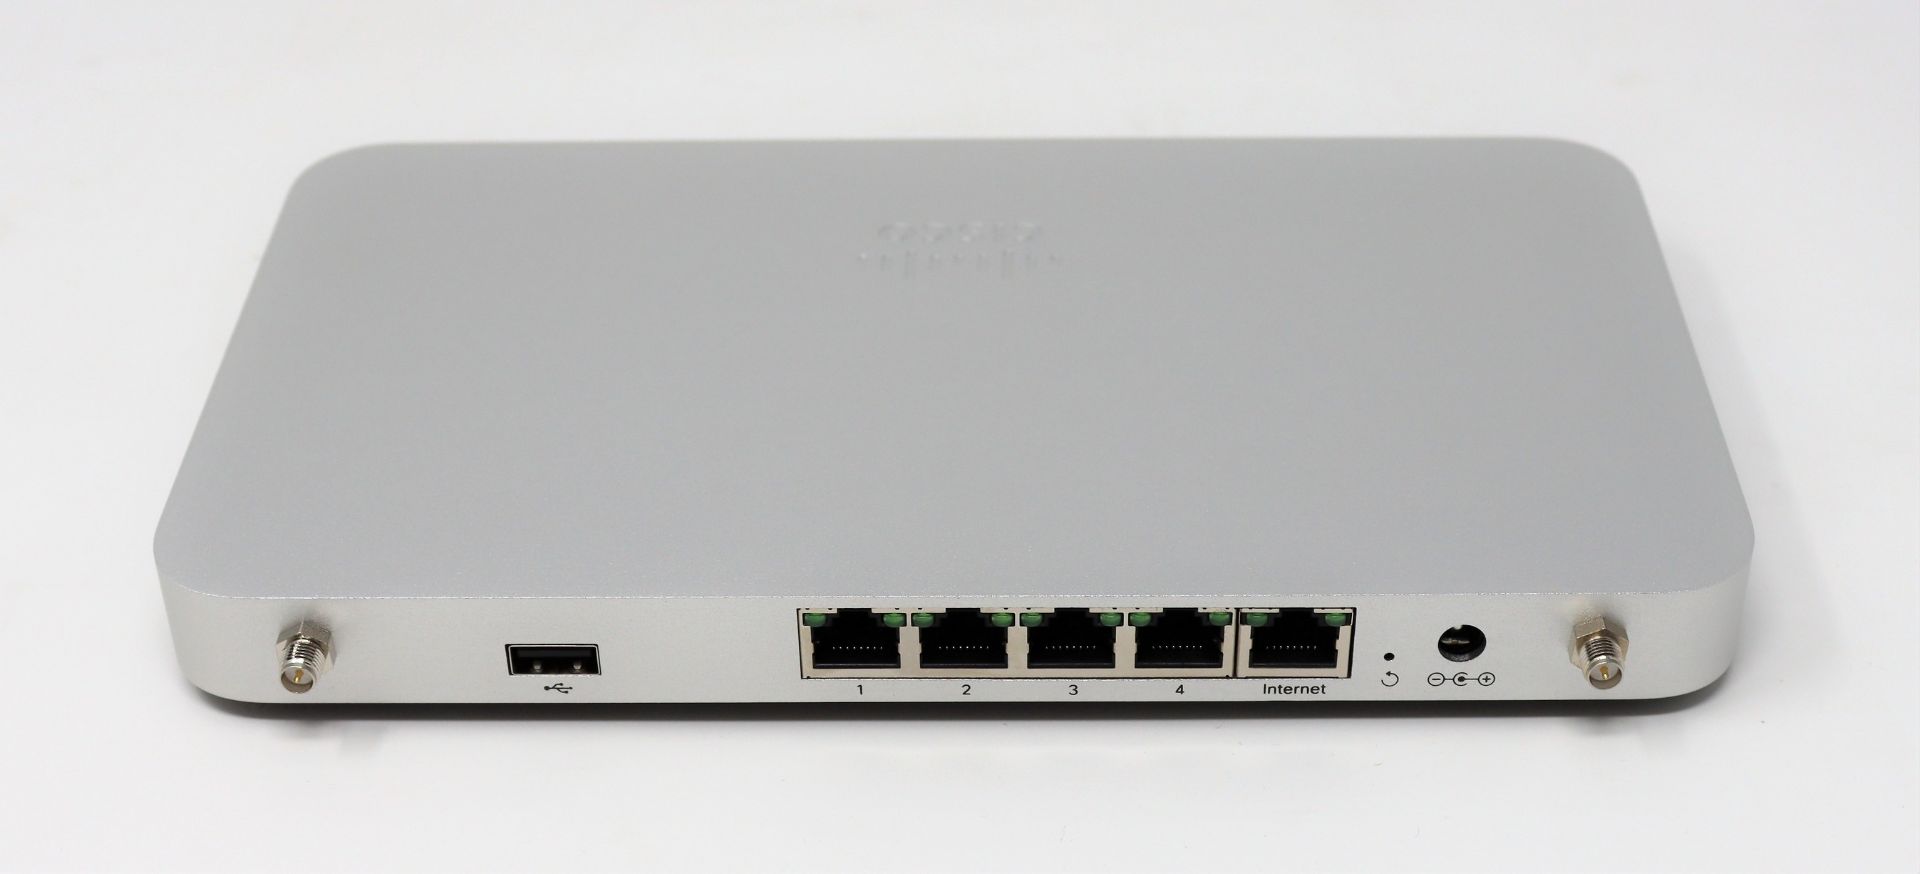 A boxed as new Meraki MX64 Cloud Managed Security Appliance (M/N: MX64-HW) (Serial: Q2MN-8W4S-